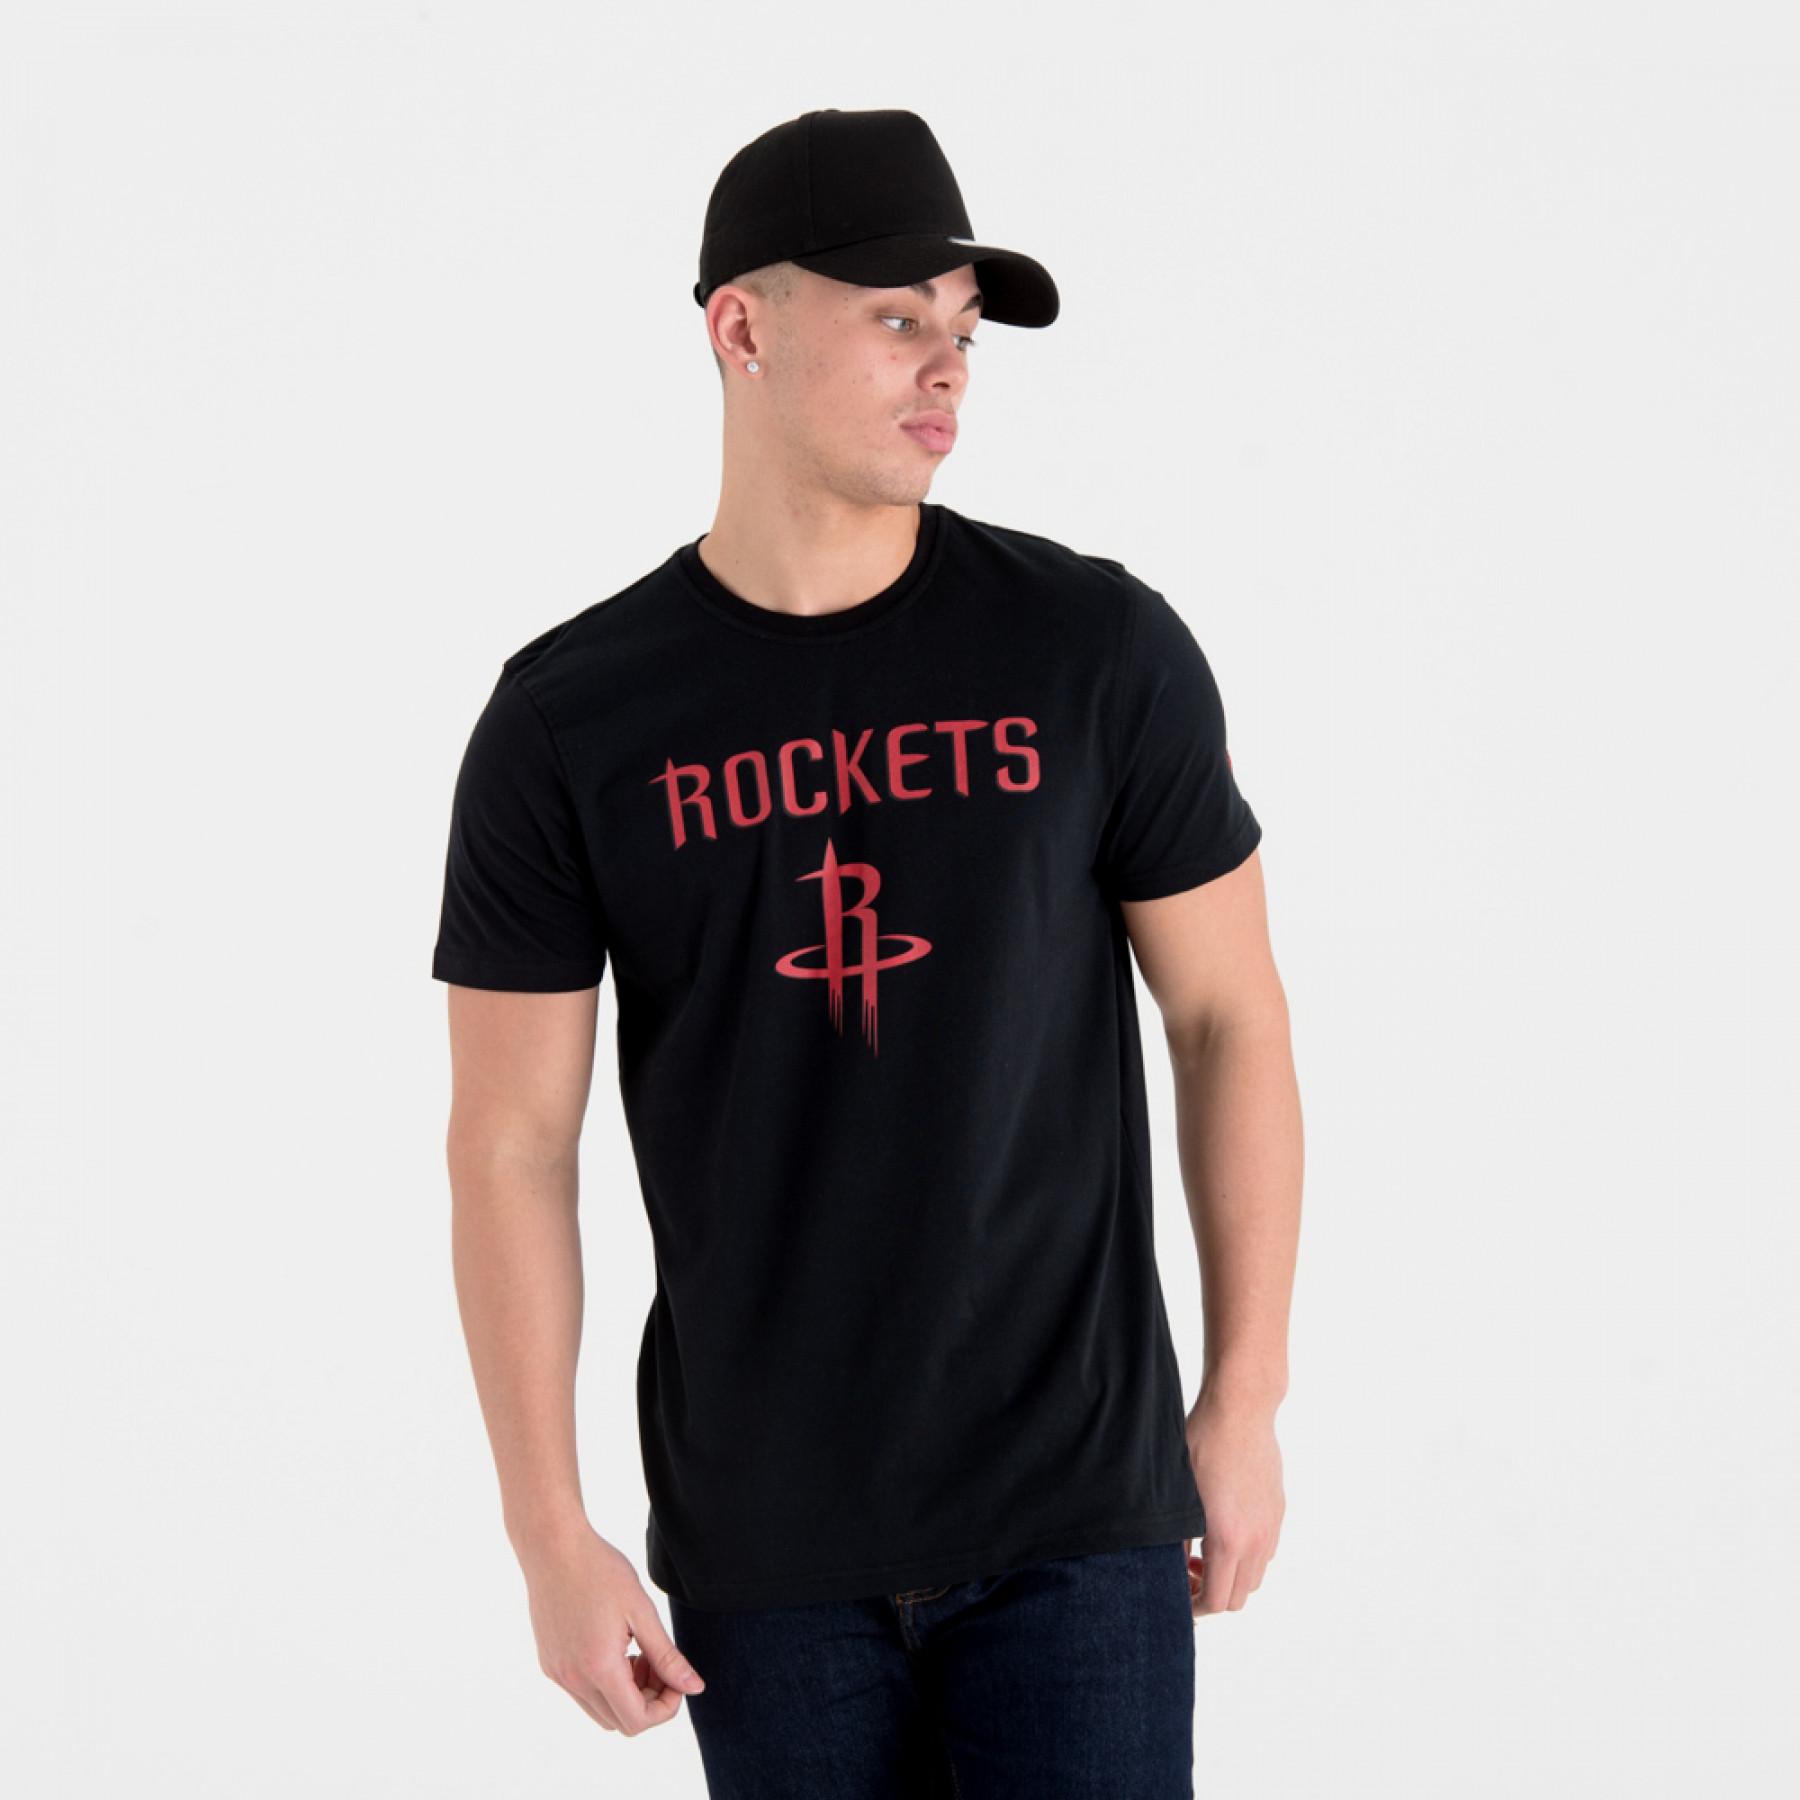  New EraT - s h i r t   logo Houston Rockets